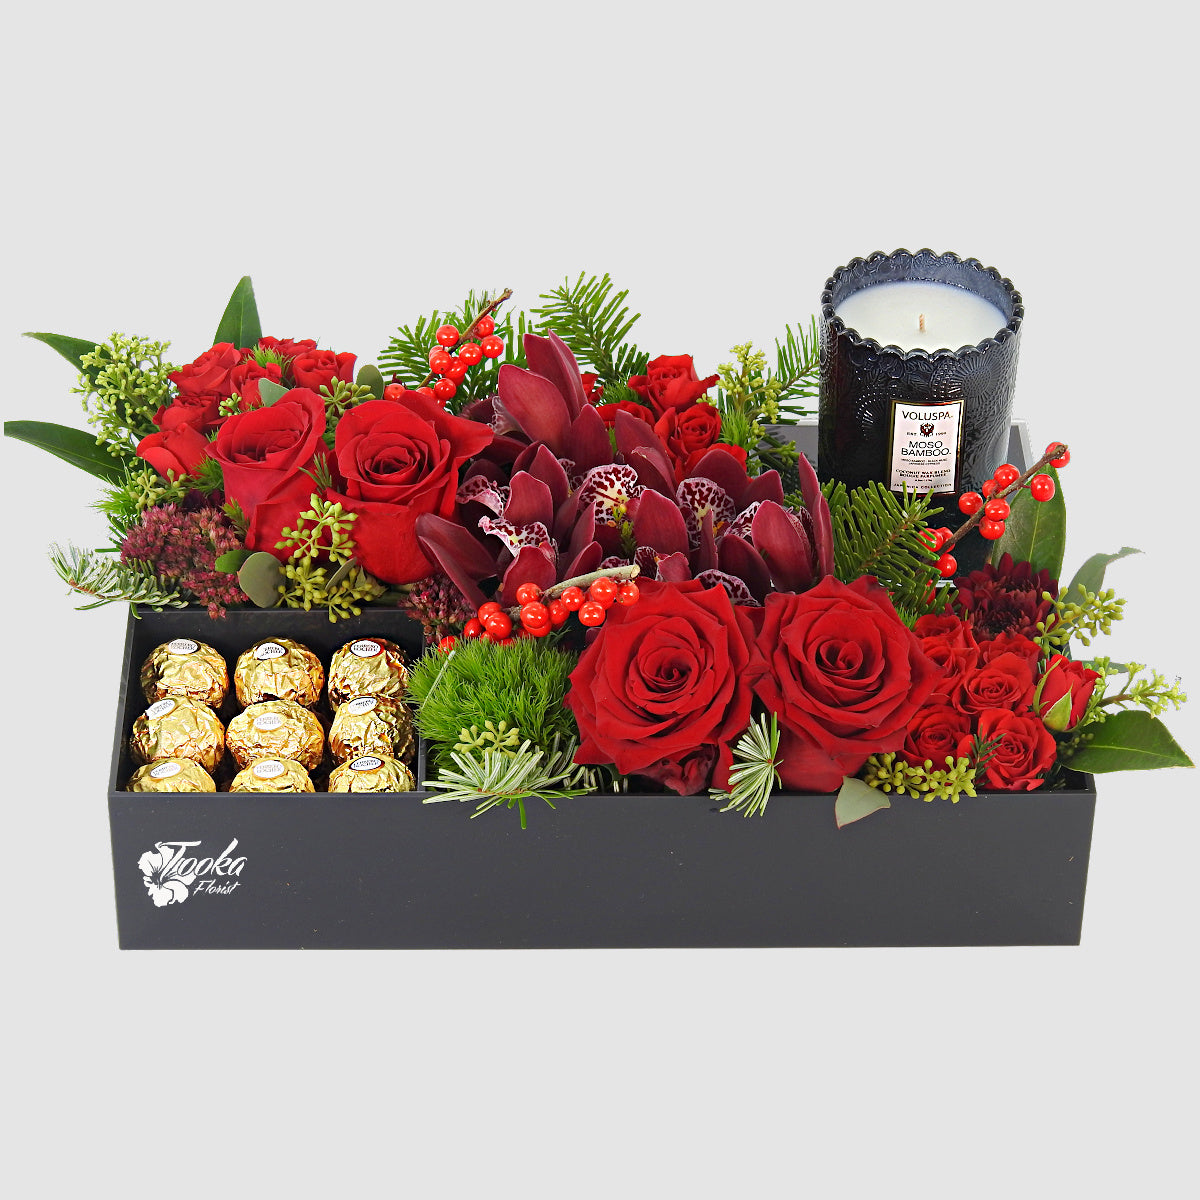 Warm Embraces Gift Box - Tooka Florist